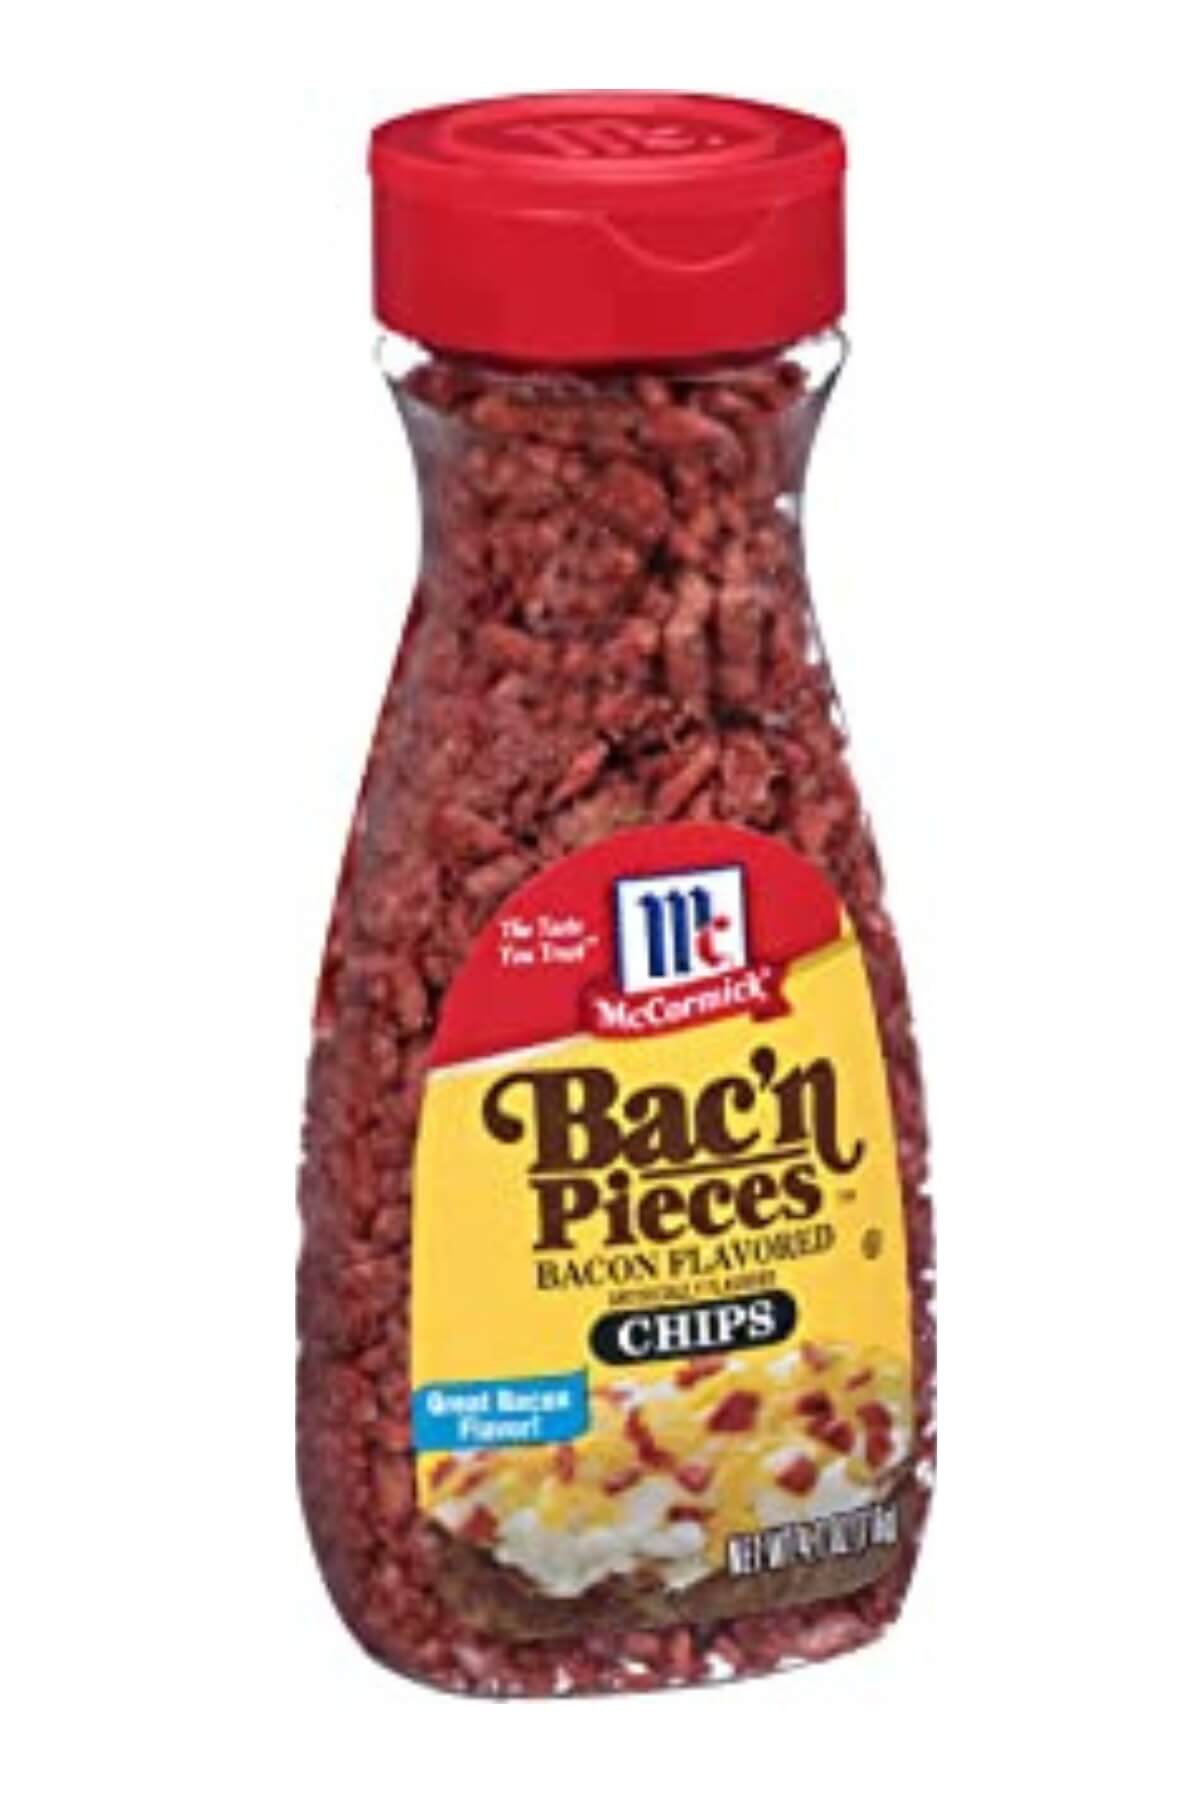 McCormick brand bacon bits in a bottle.